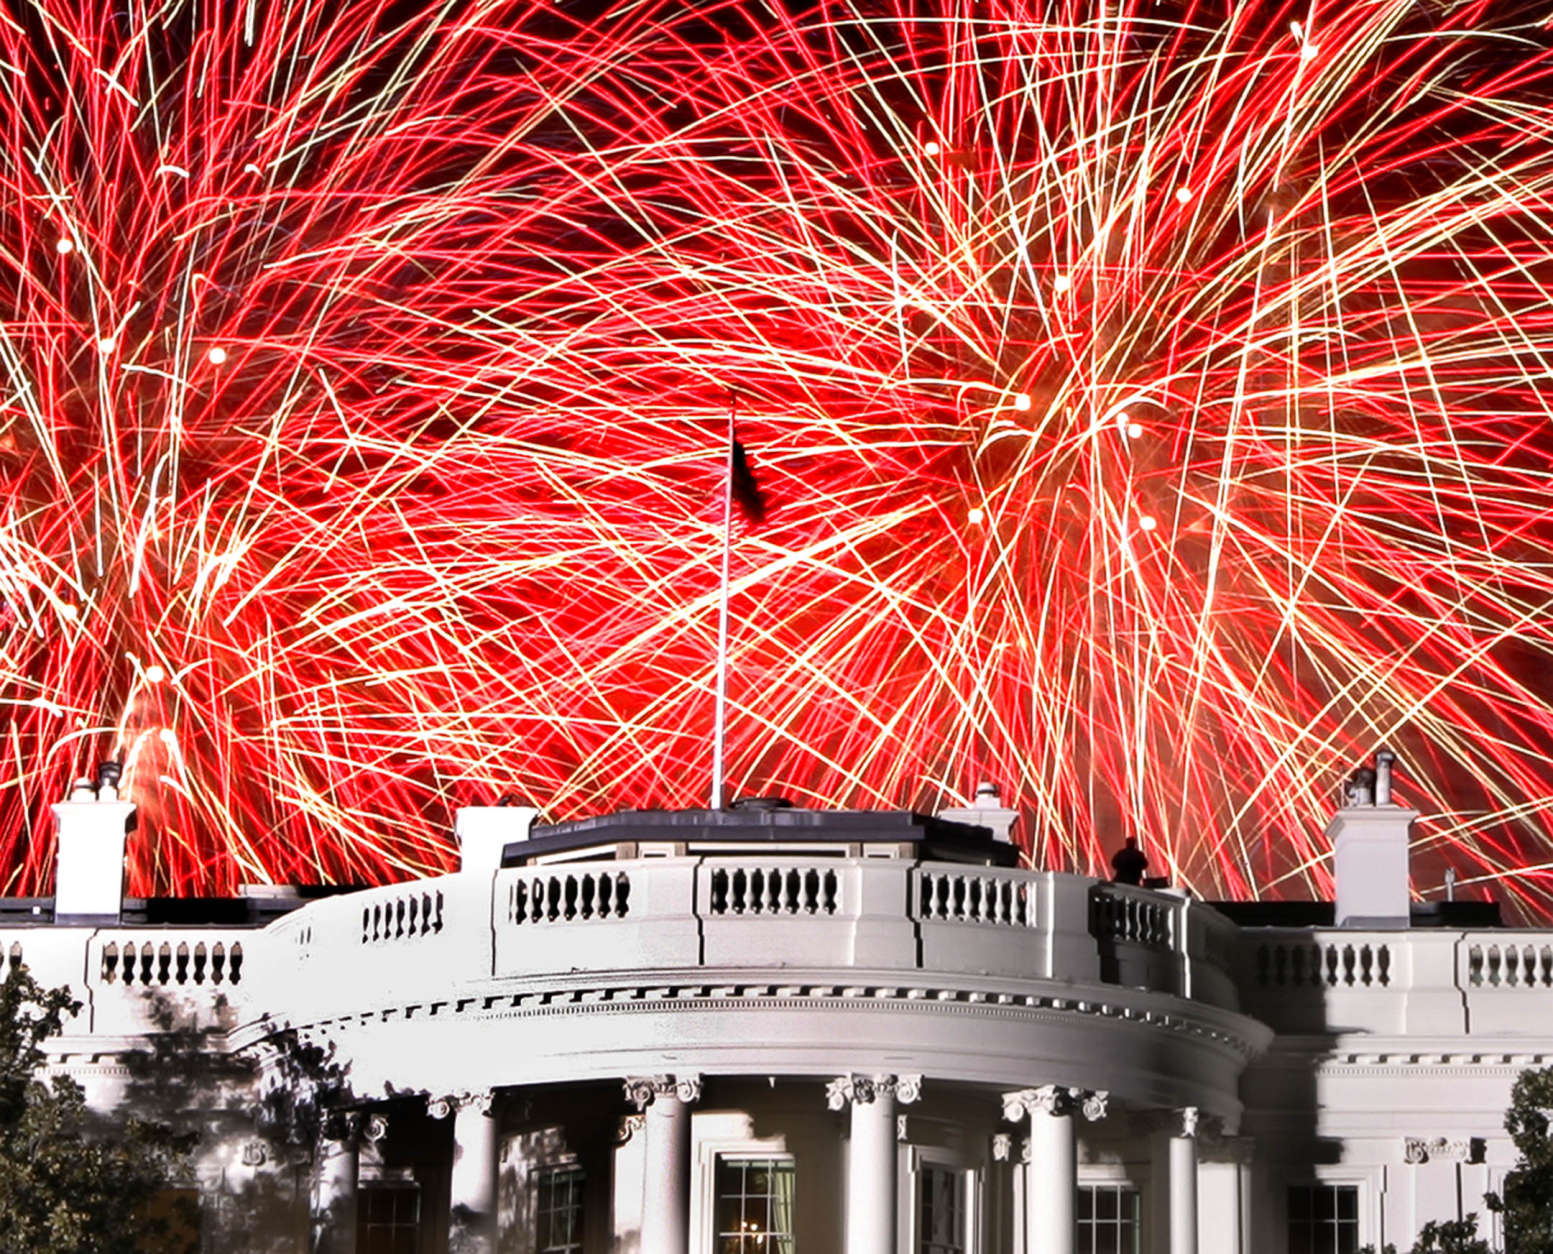 Fireworks explode over the White House during the "Celebration of Freedom" festivities on the eve of President Bush's second inauguration, in Washington, Wednesday, Jan. 19, 2005. (AP Photo/J. Scott Applewhite)